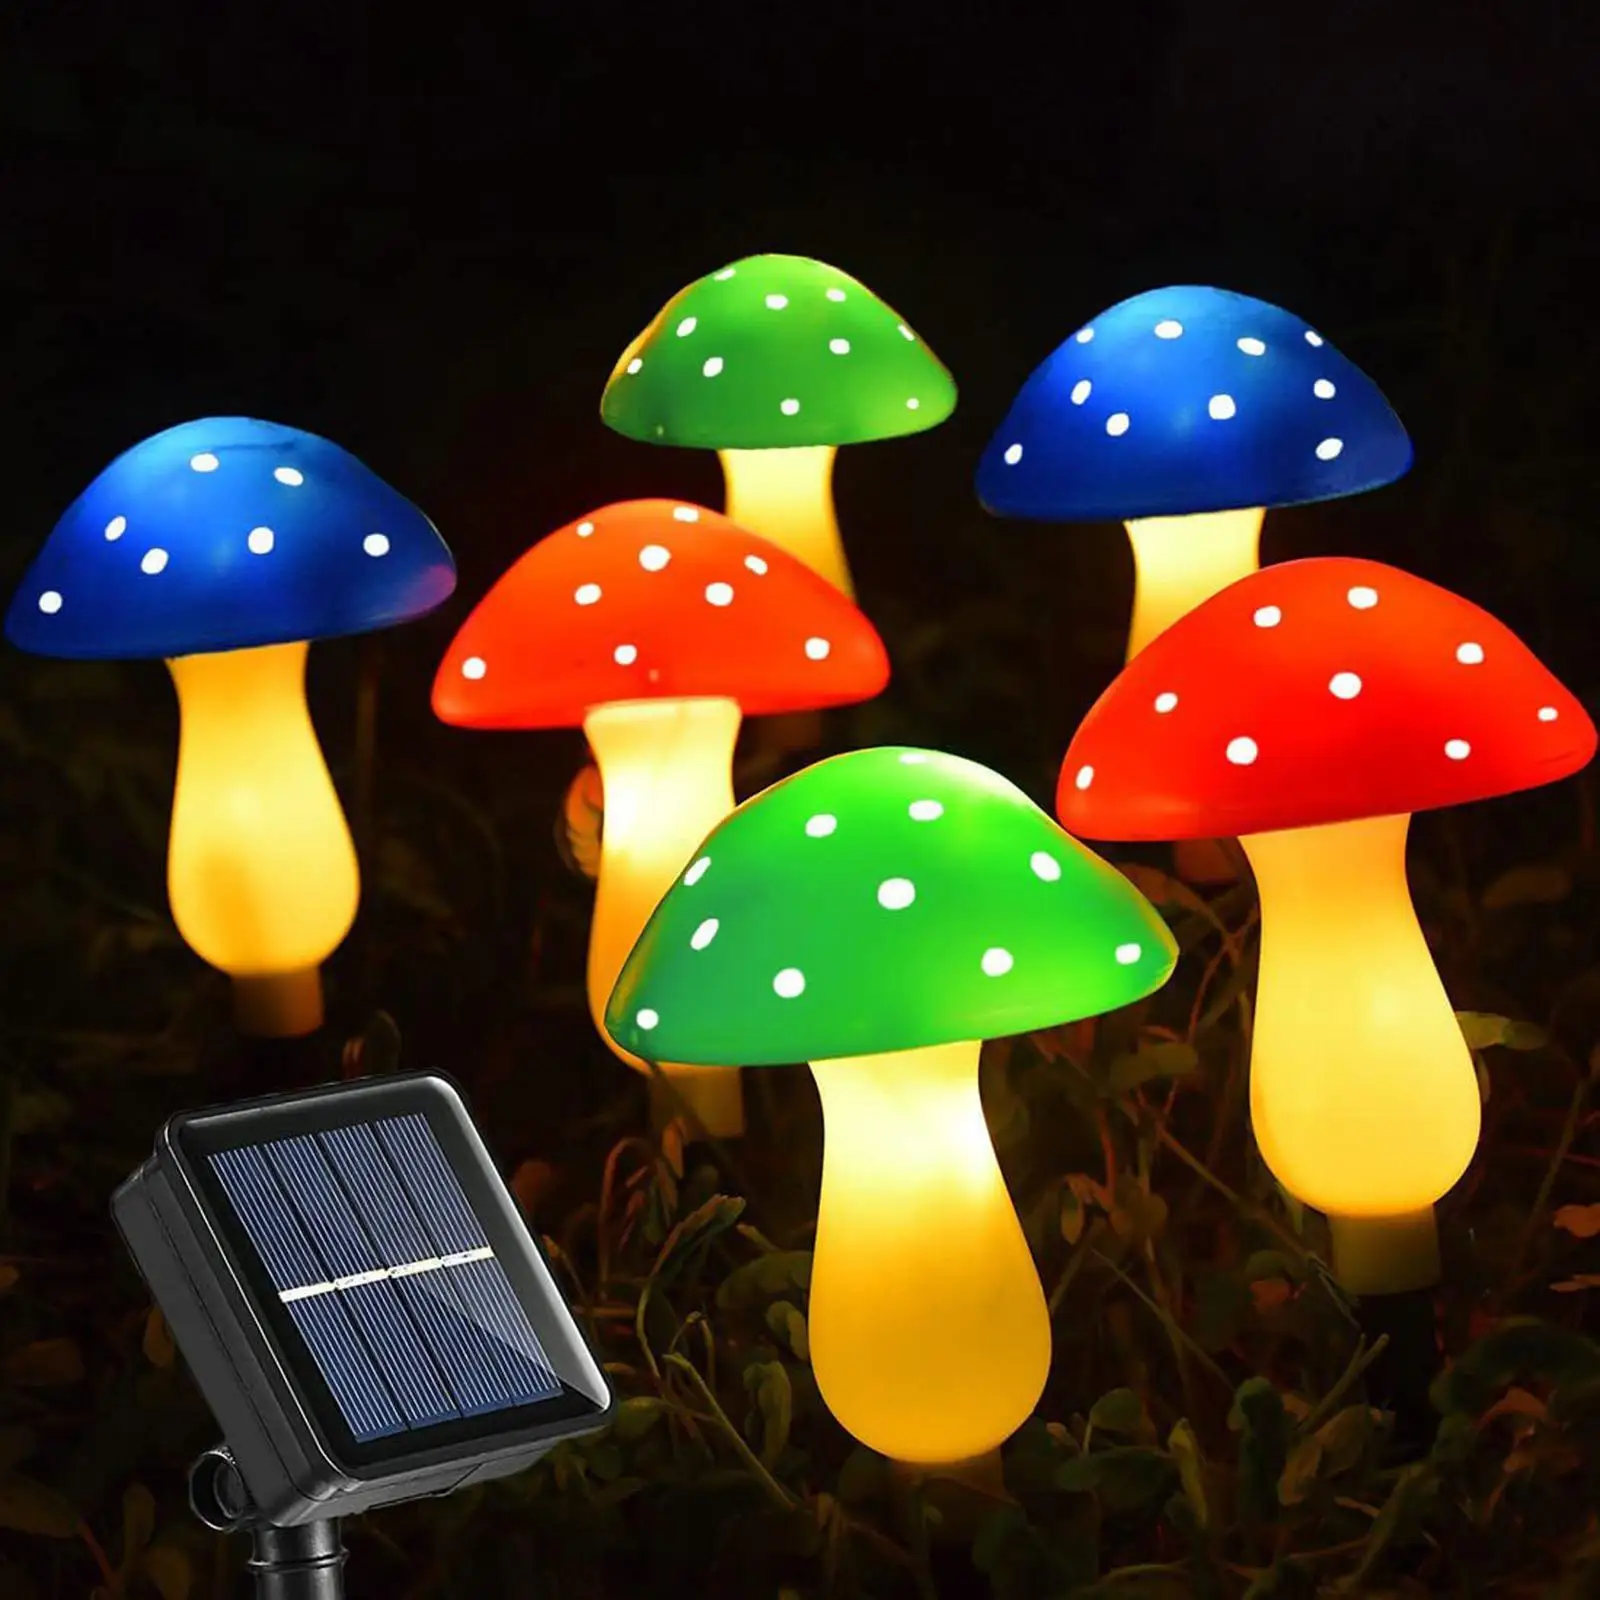 Outdoor Solar Garden Lights Automatical Solar Mushroom Decor for Fence Backyard Lawn